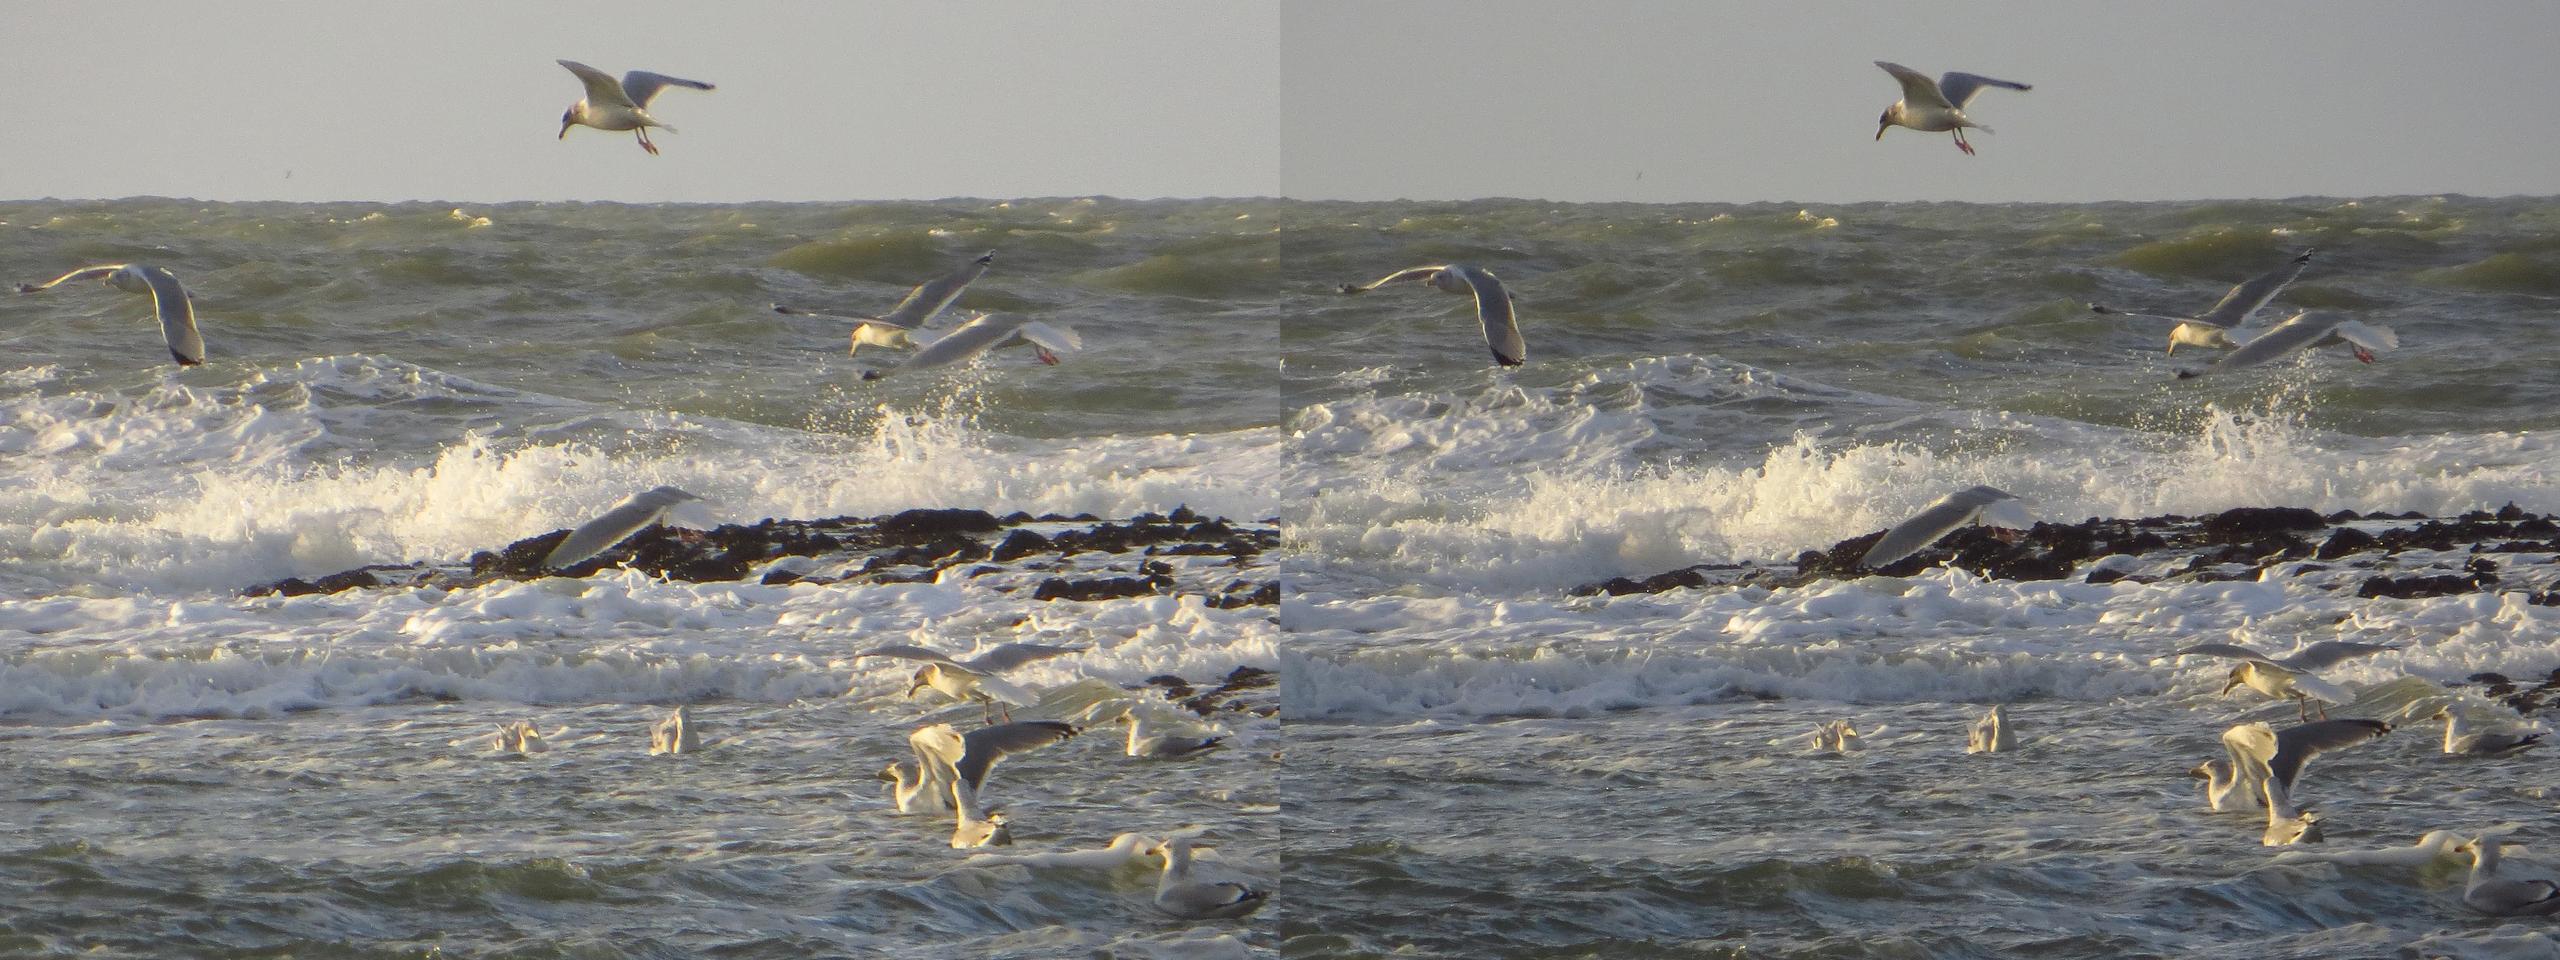 Seagulls balancing in the wind